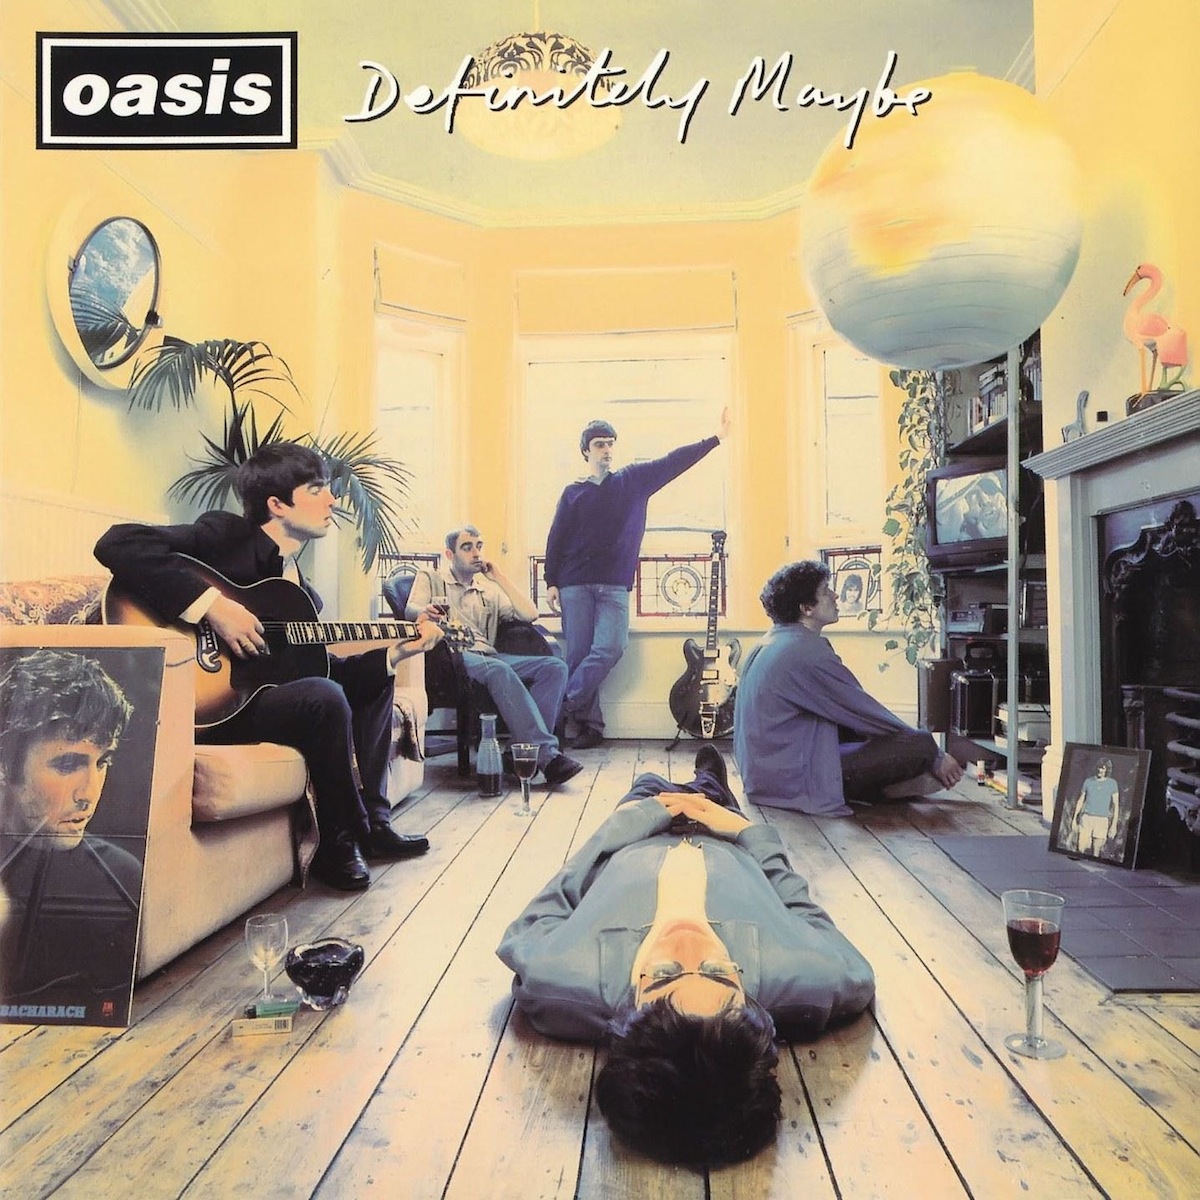 Oasis 25 Jahre Definitely Maybe 11 Ultimative Fakten Uber Das